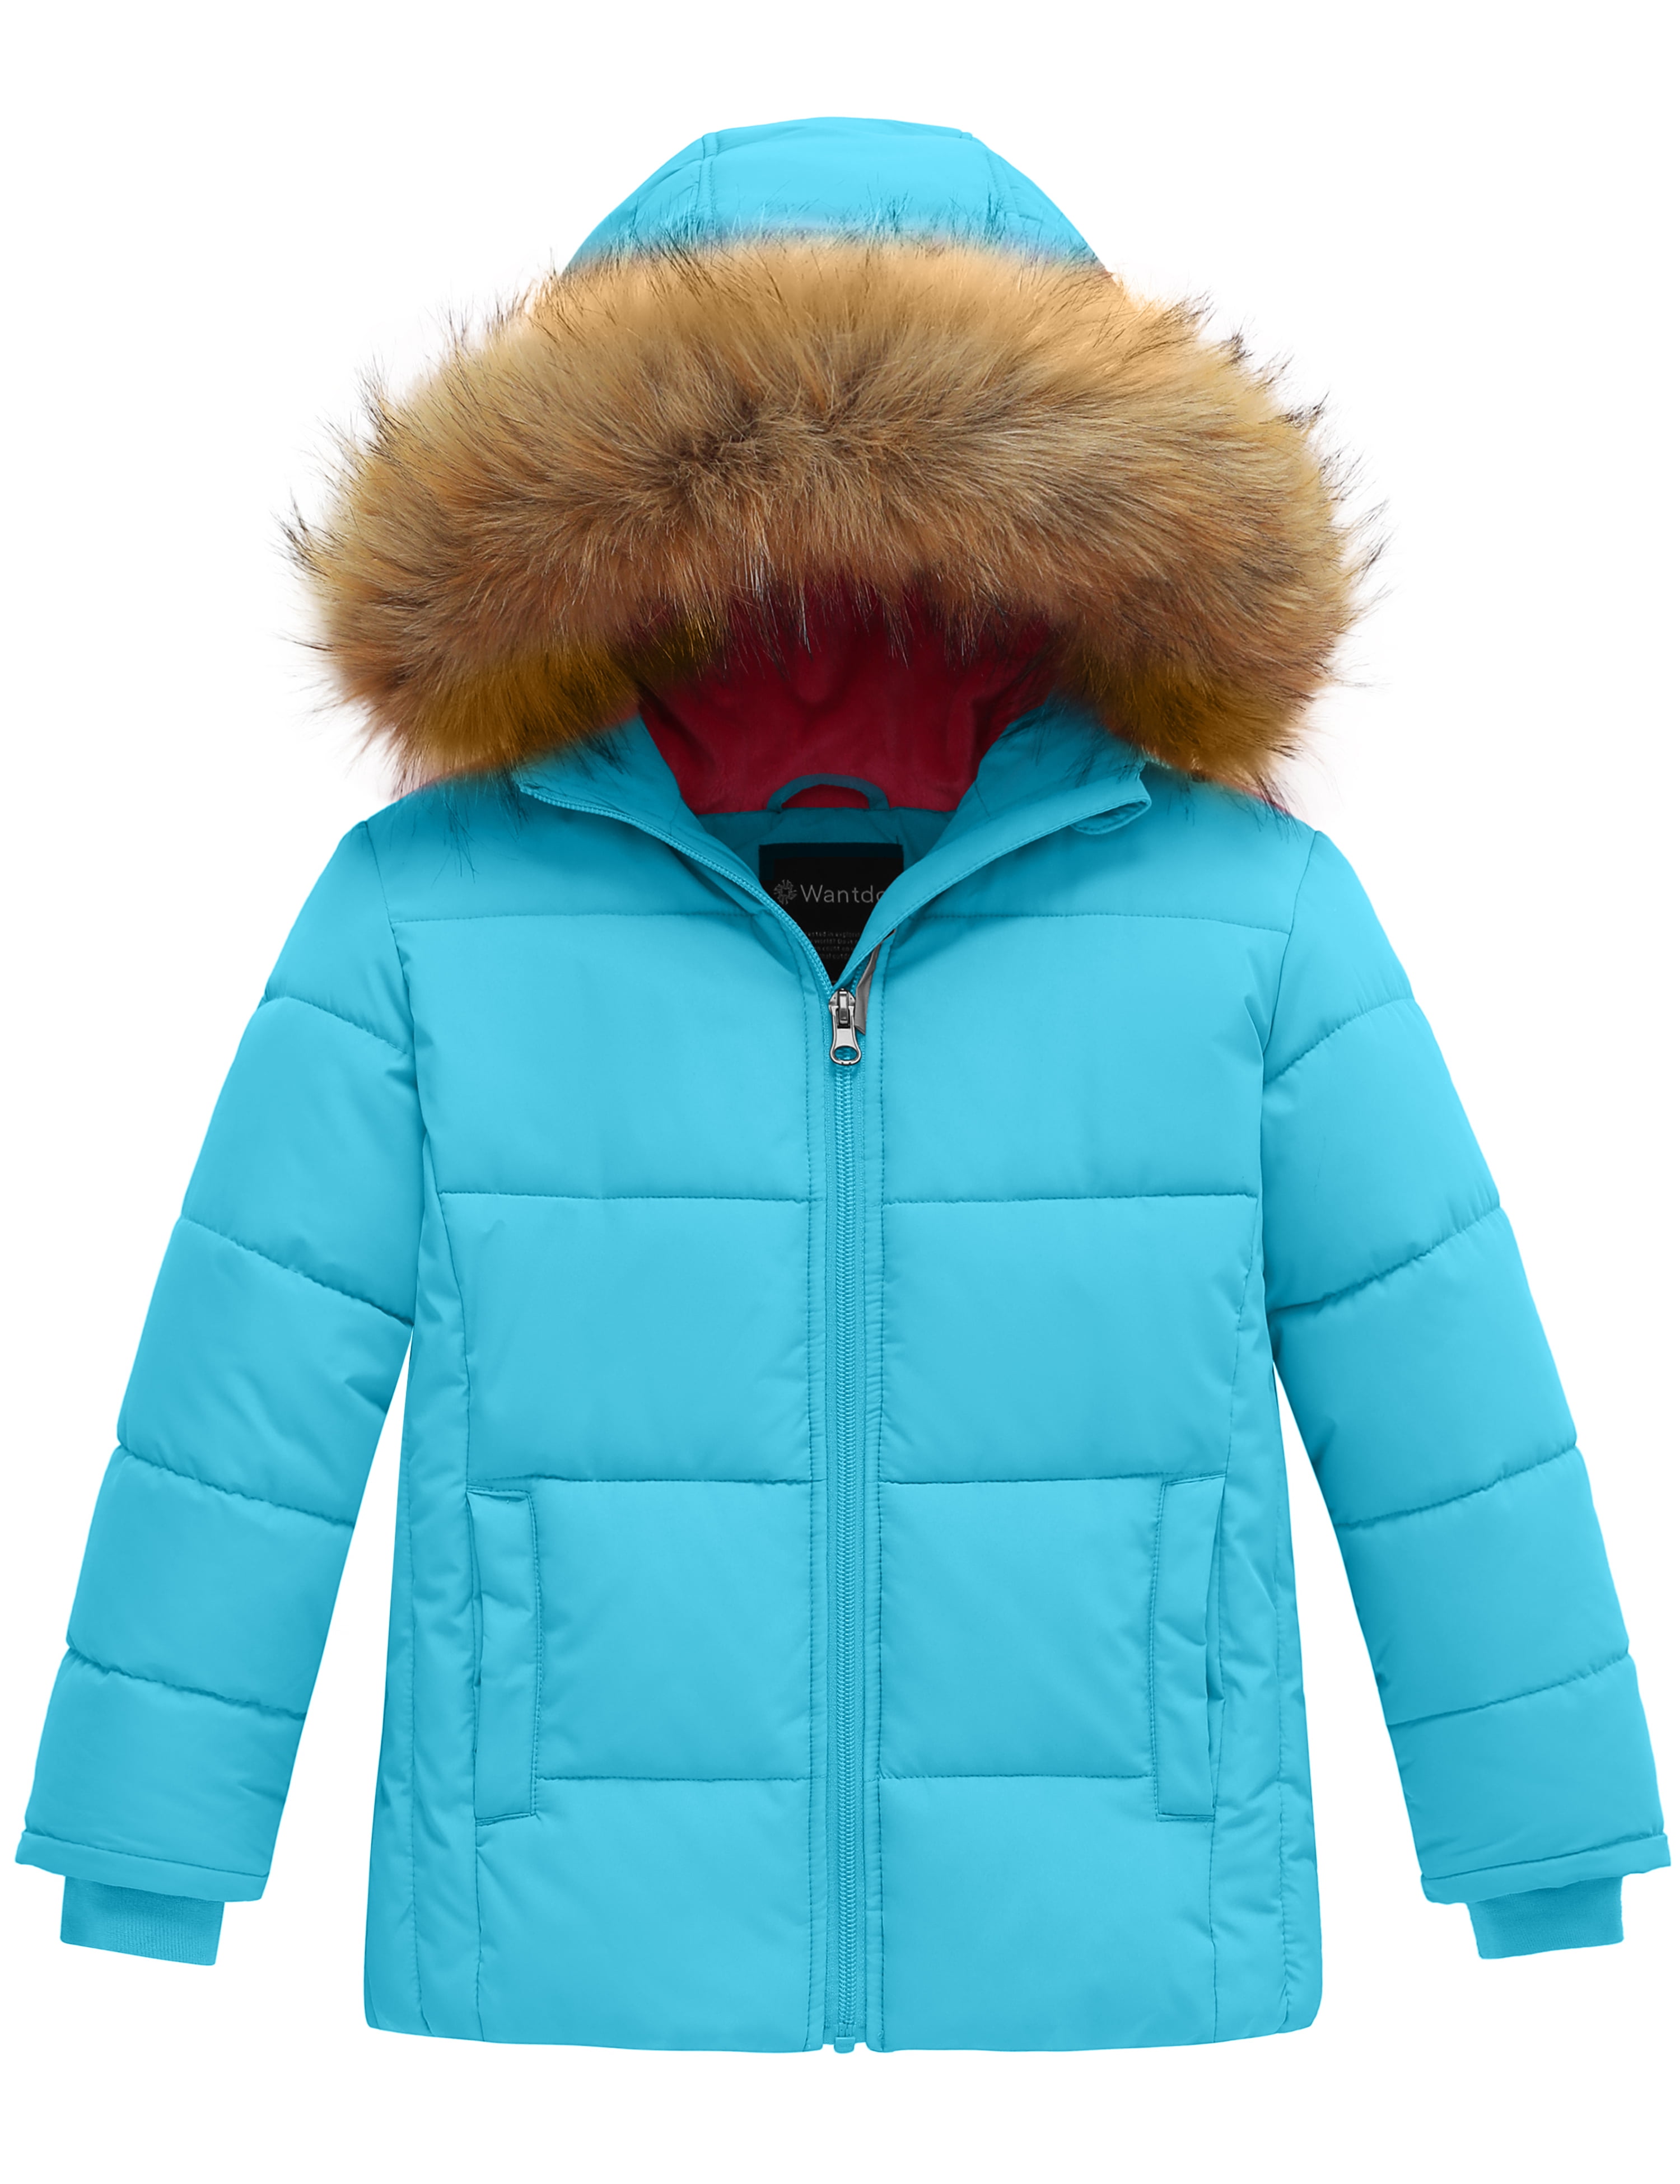 Wantdo Girls/' Winter Parka Coat Warm Padded Hooded Puffer Jacket